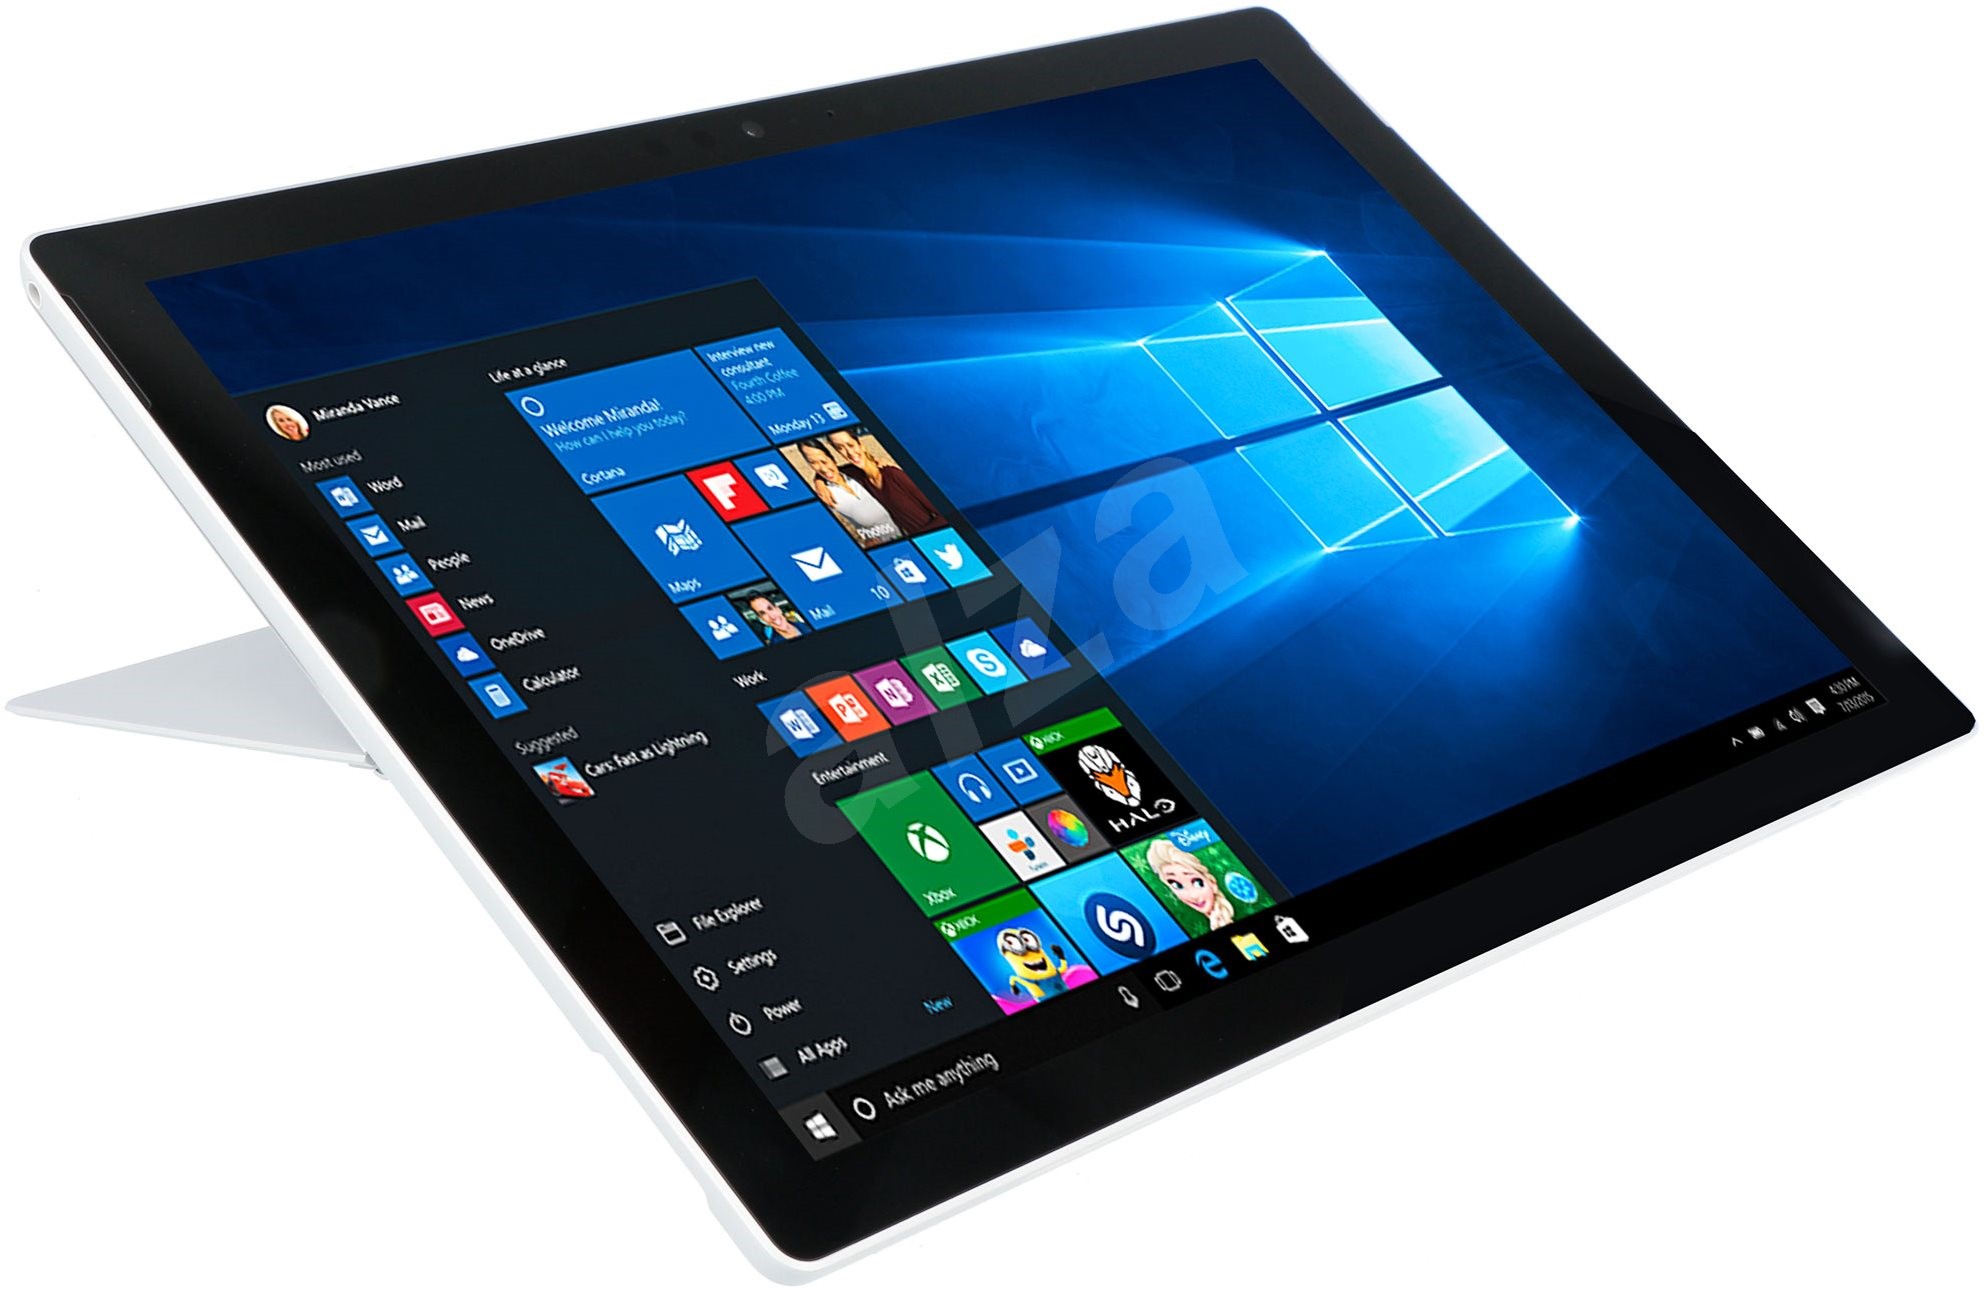 microsoft surface pro windows 8 pro 128gb tablet specs